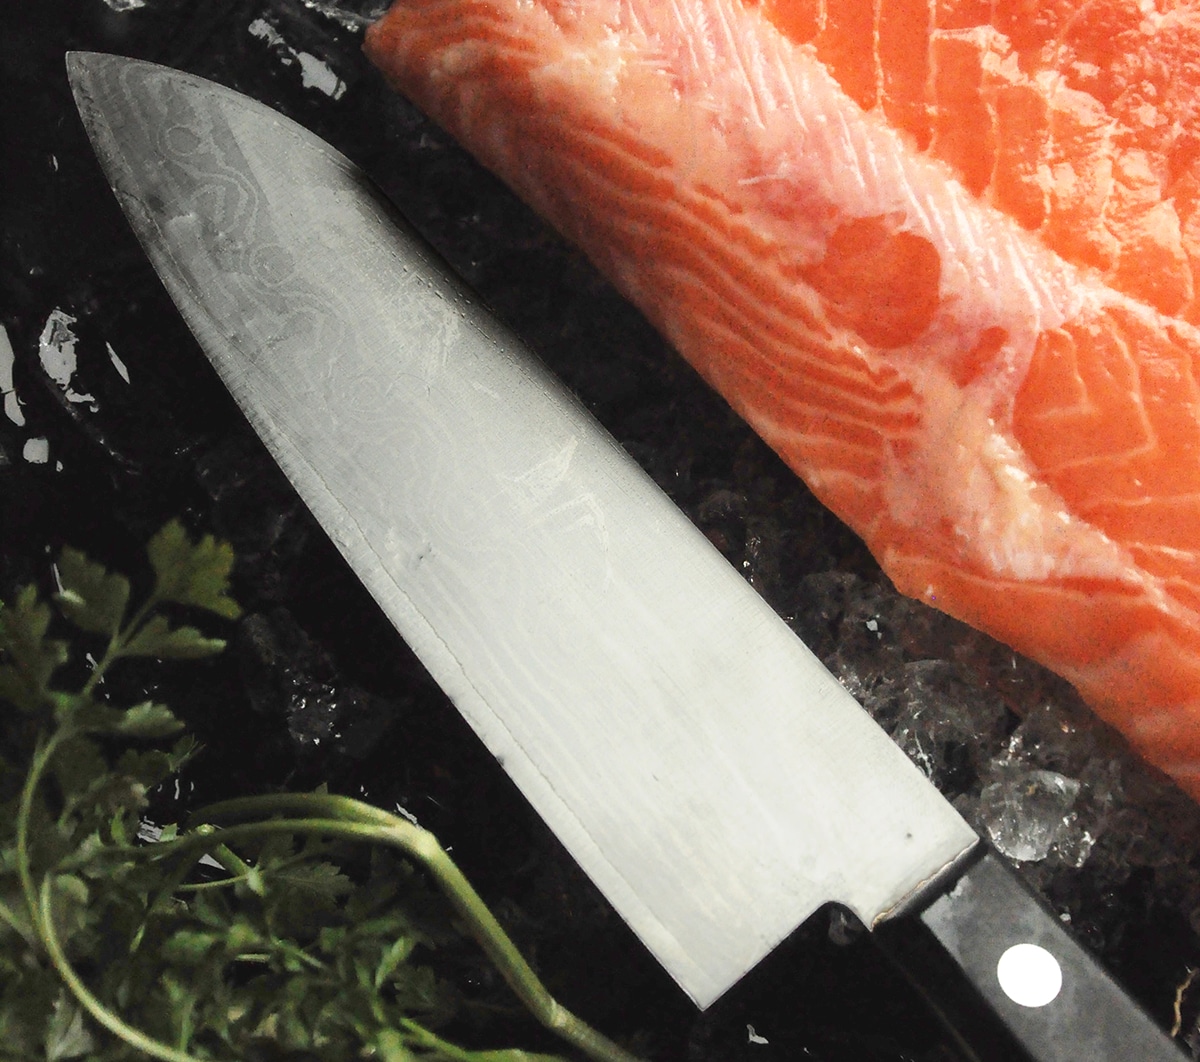 and filet of salmon and a santoku knife